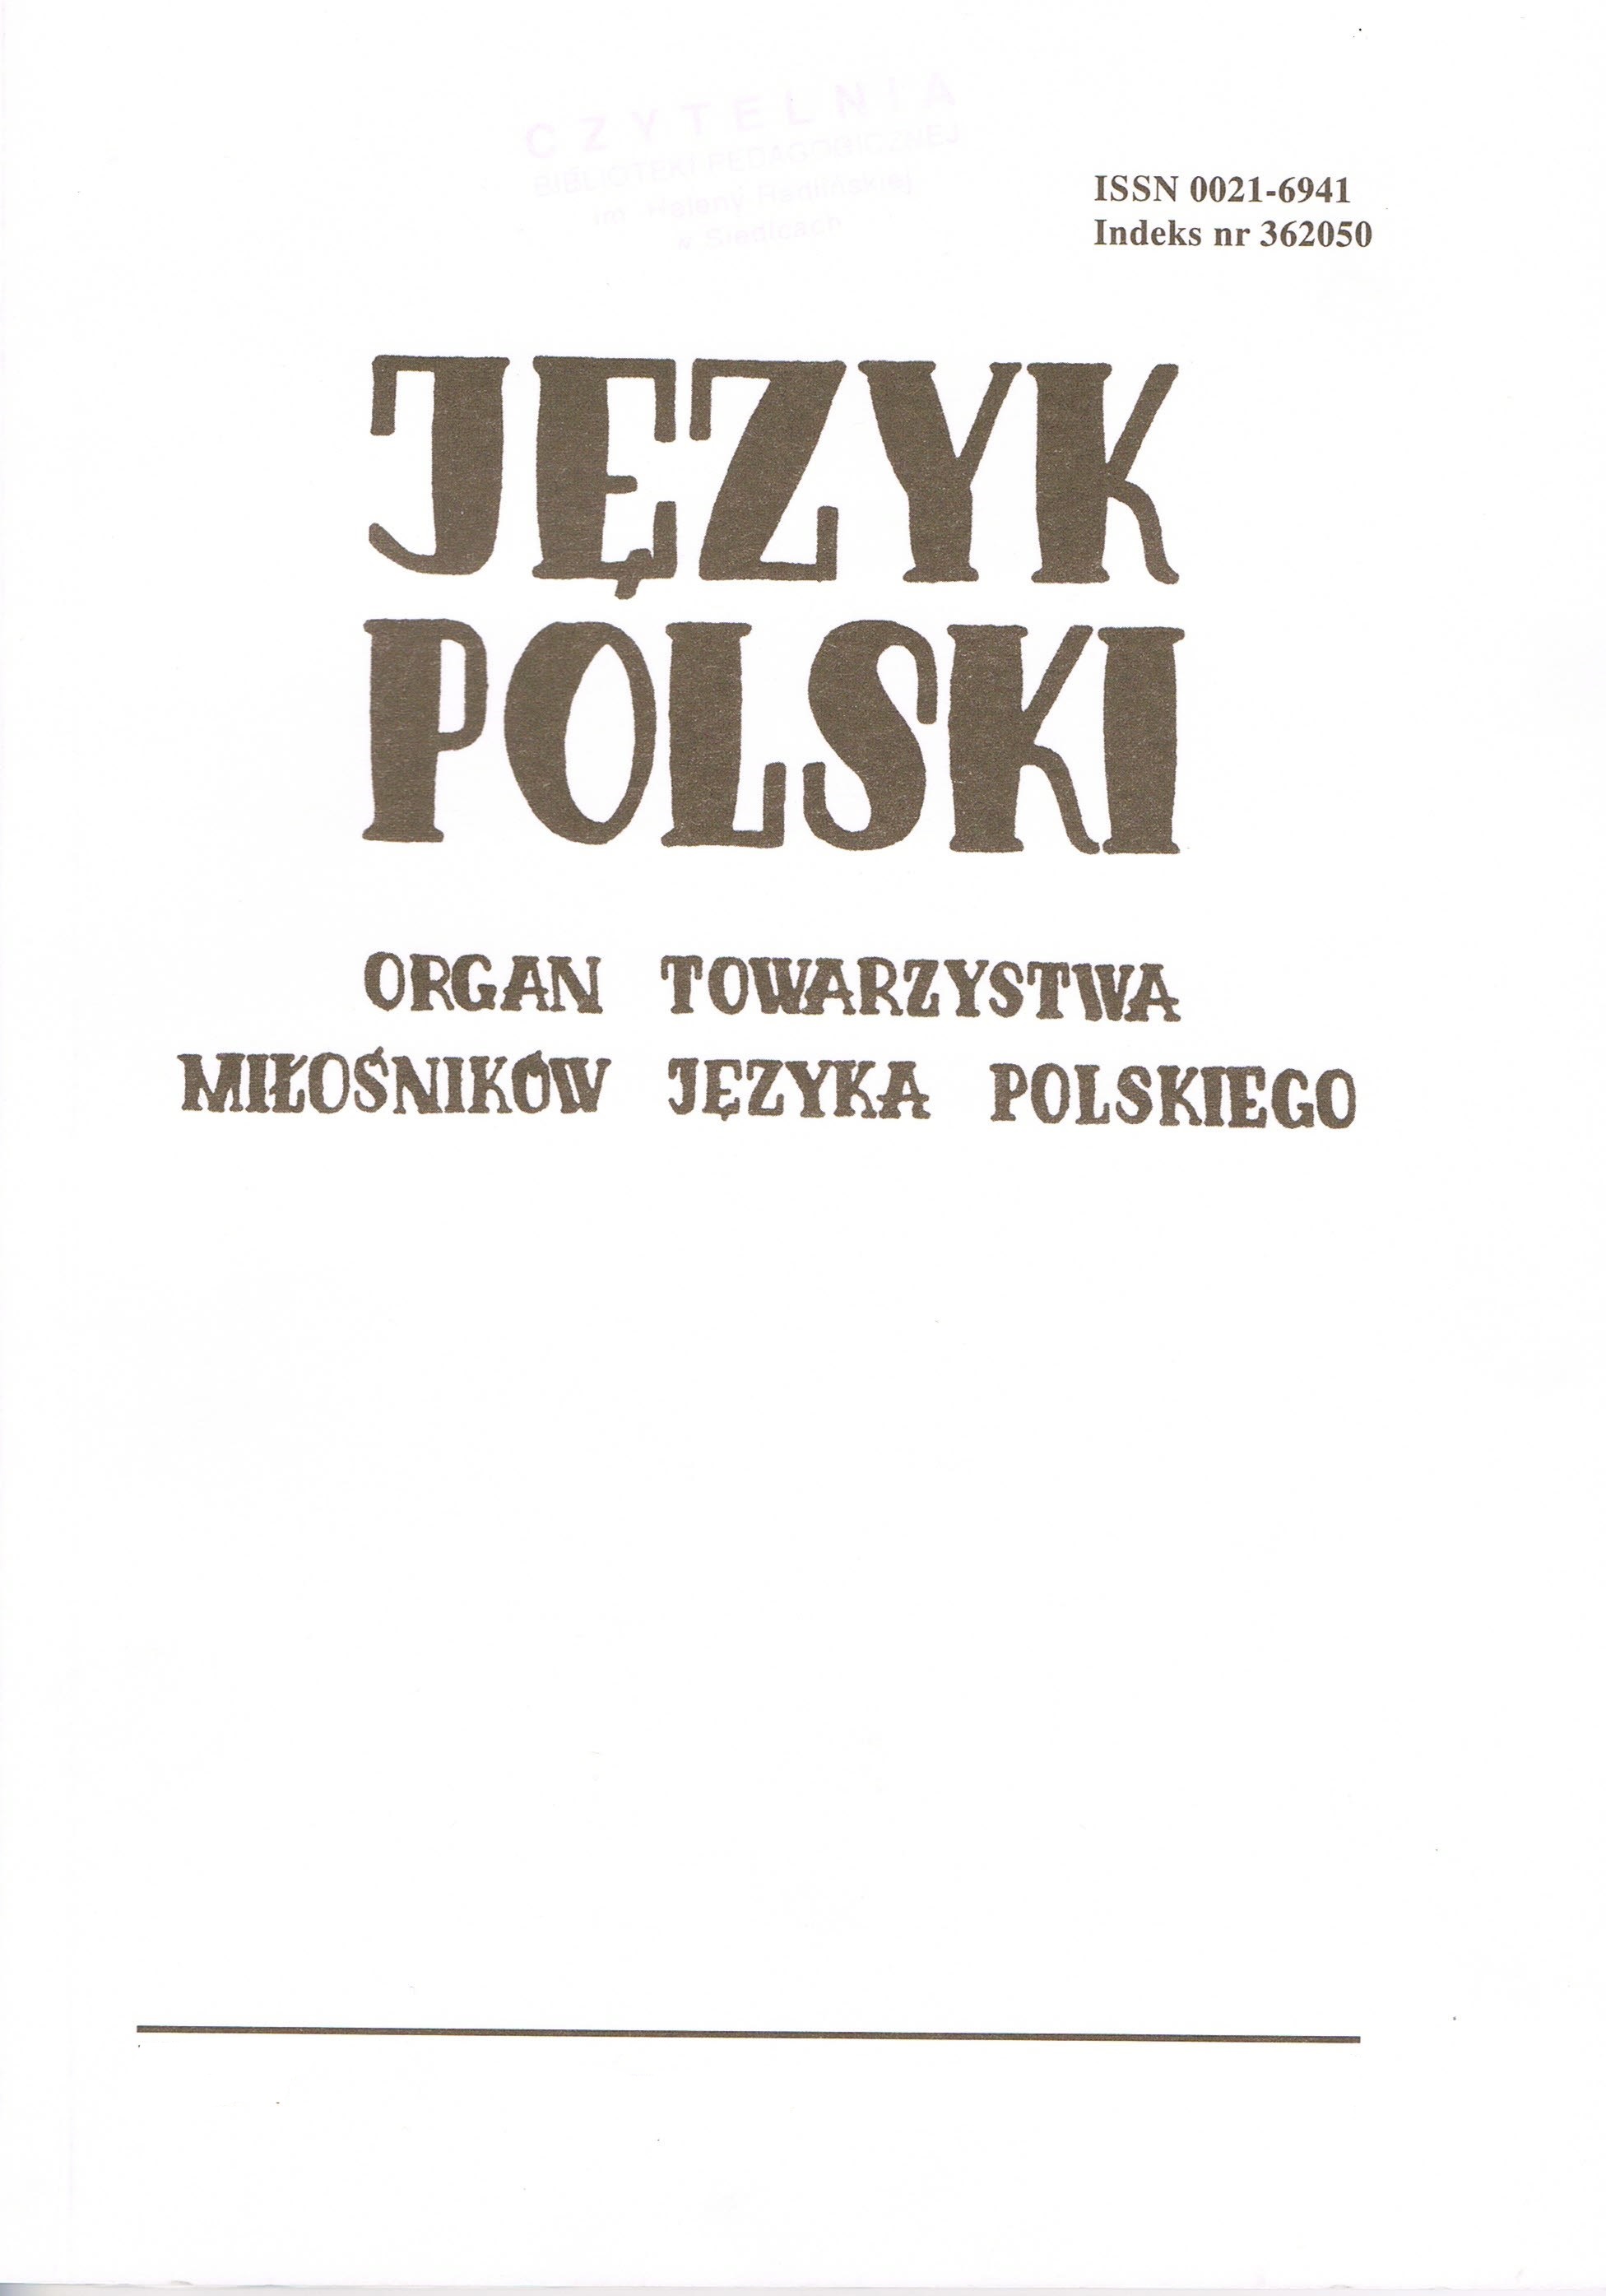 Professor Krystyna Pisarkowa (January 30, 1932-february 27, 2010) (with a photo) Cover Image